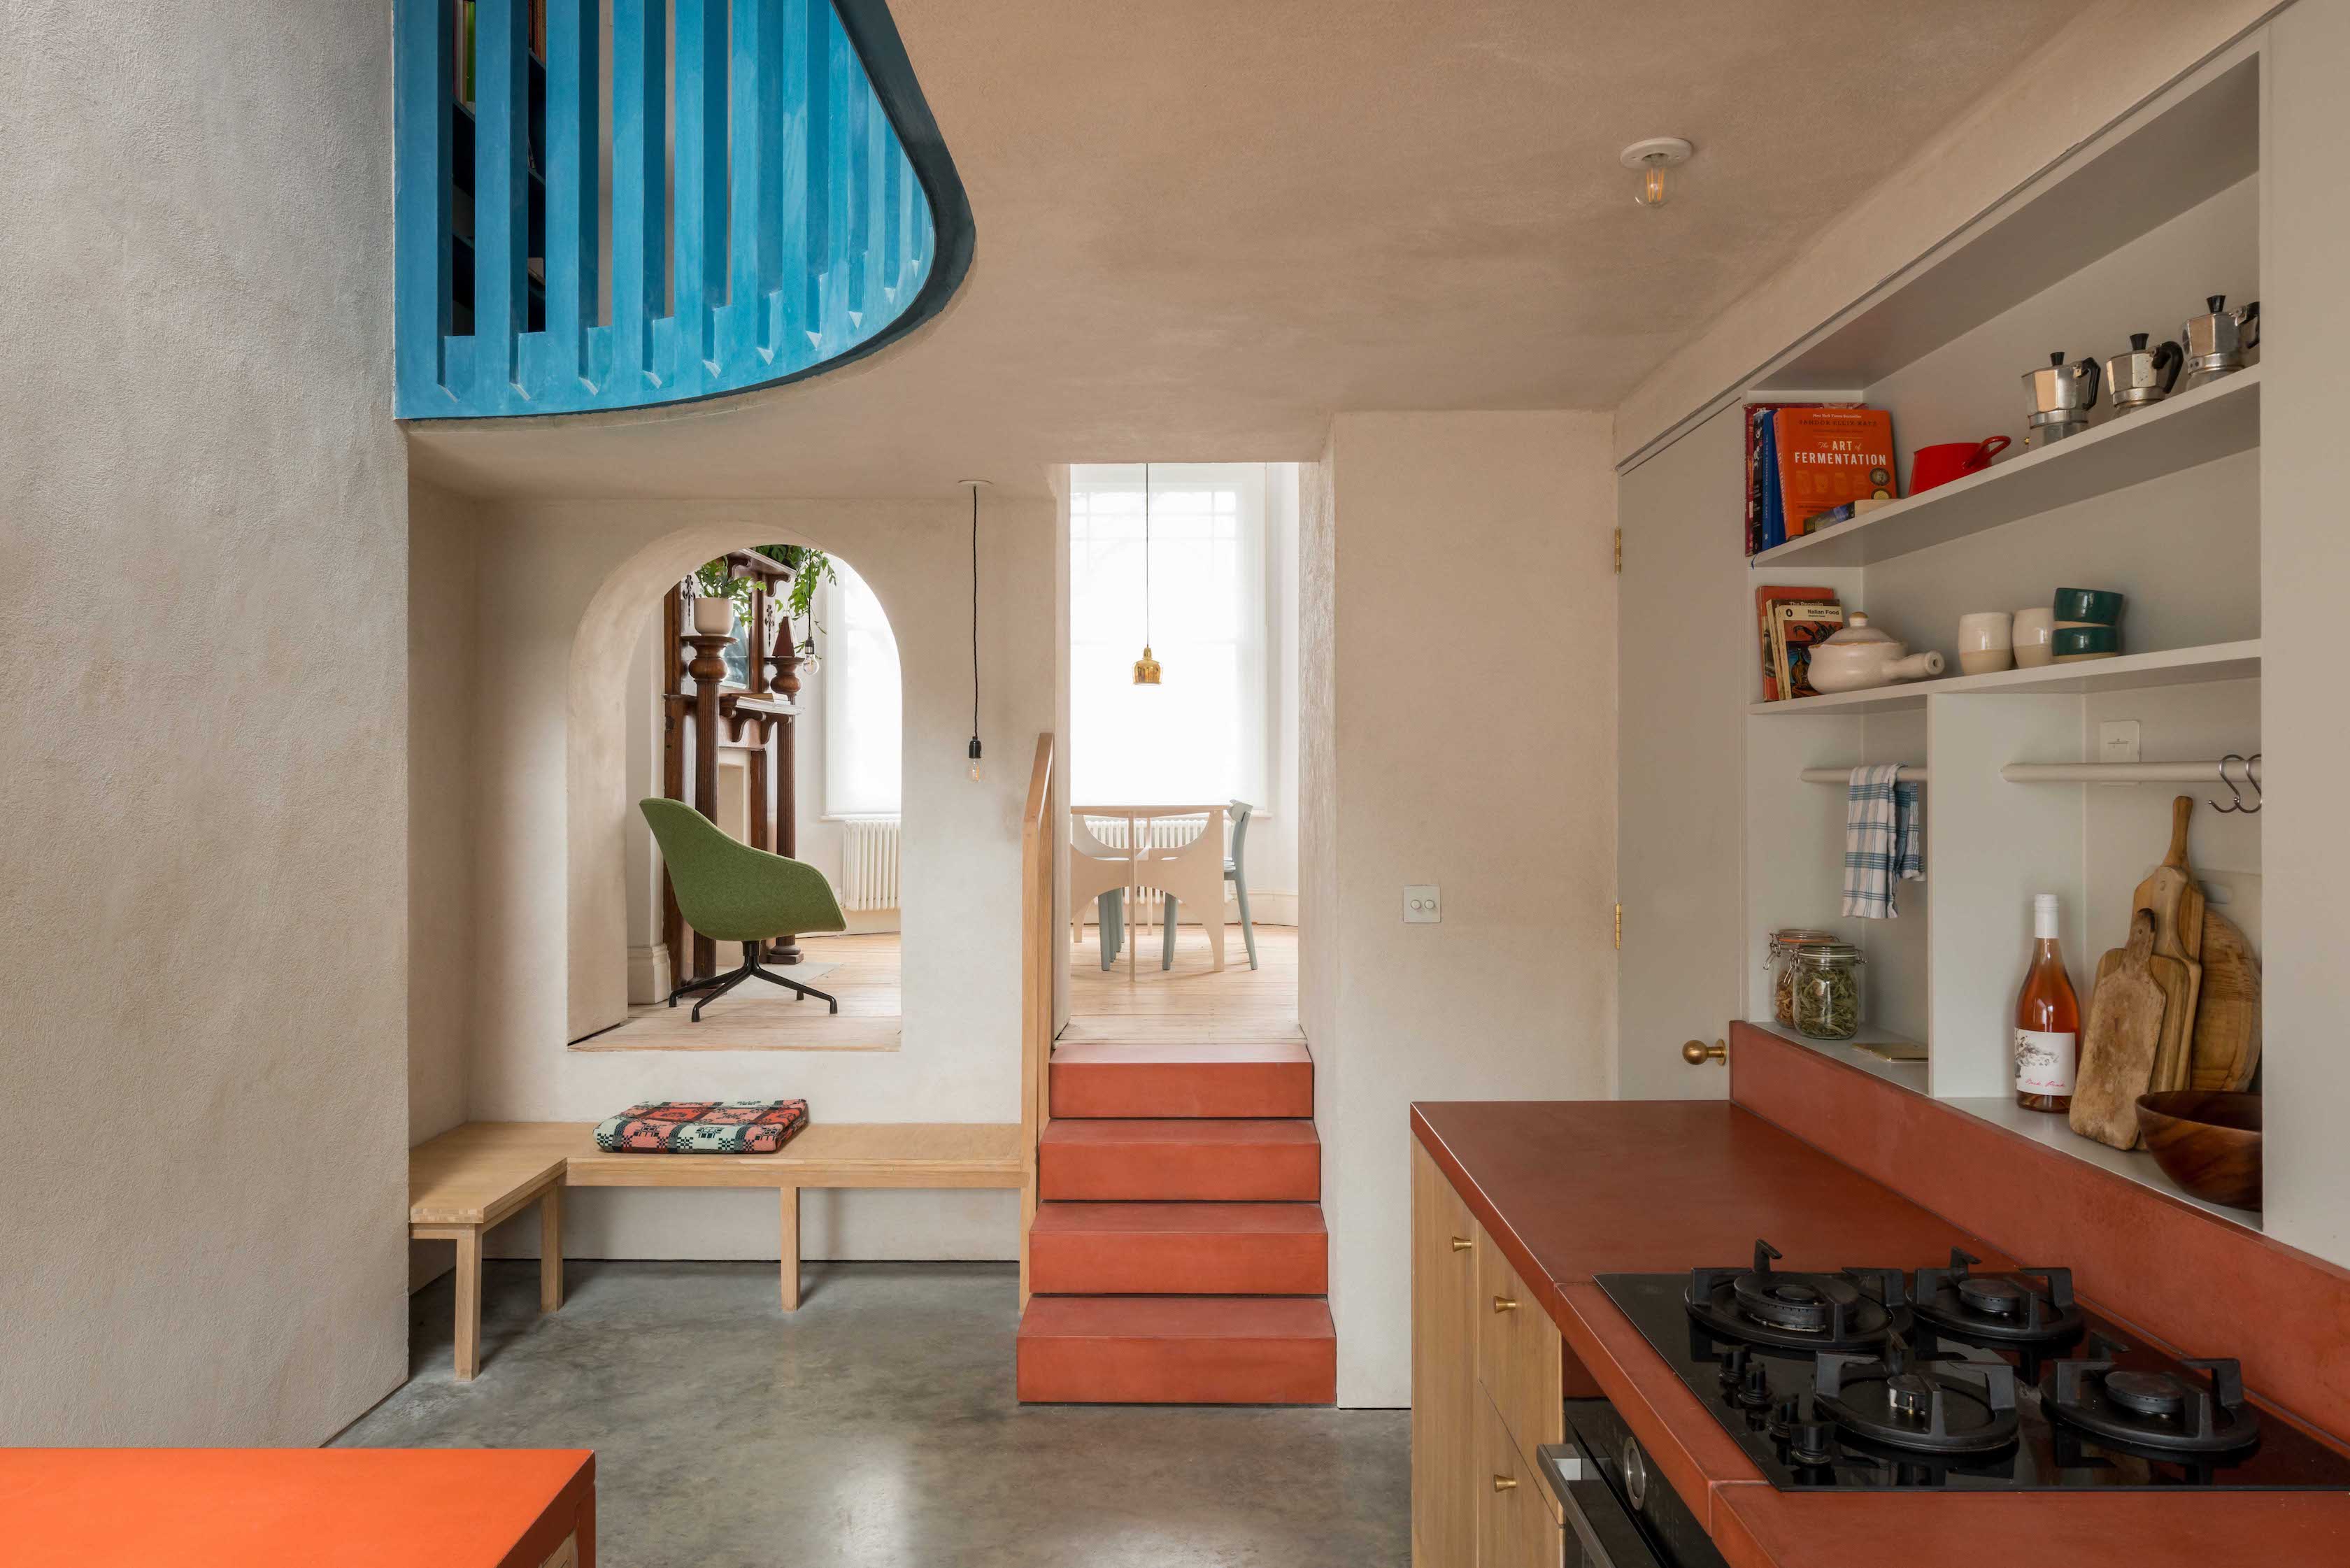 pigmented concrete kitchen, the house recast by studio ben allen, north london. 2